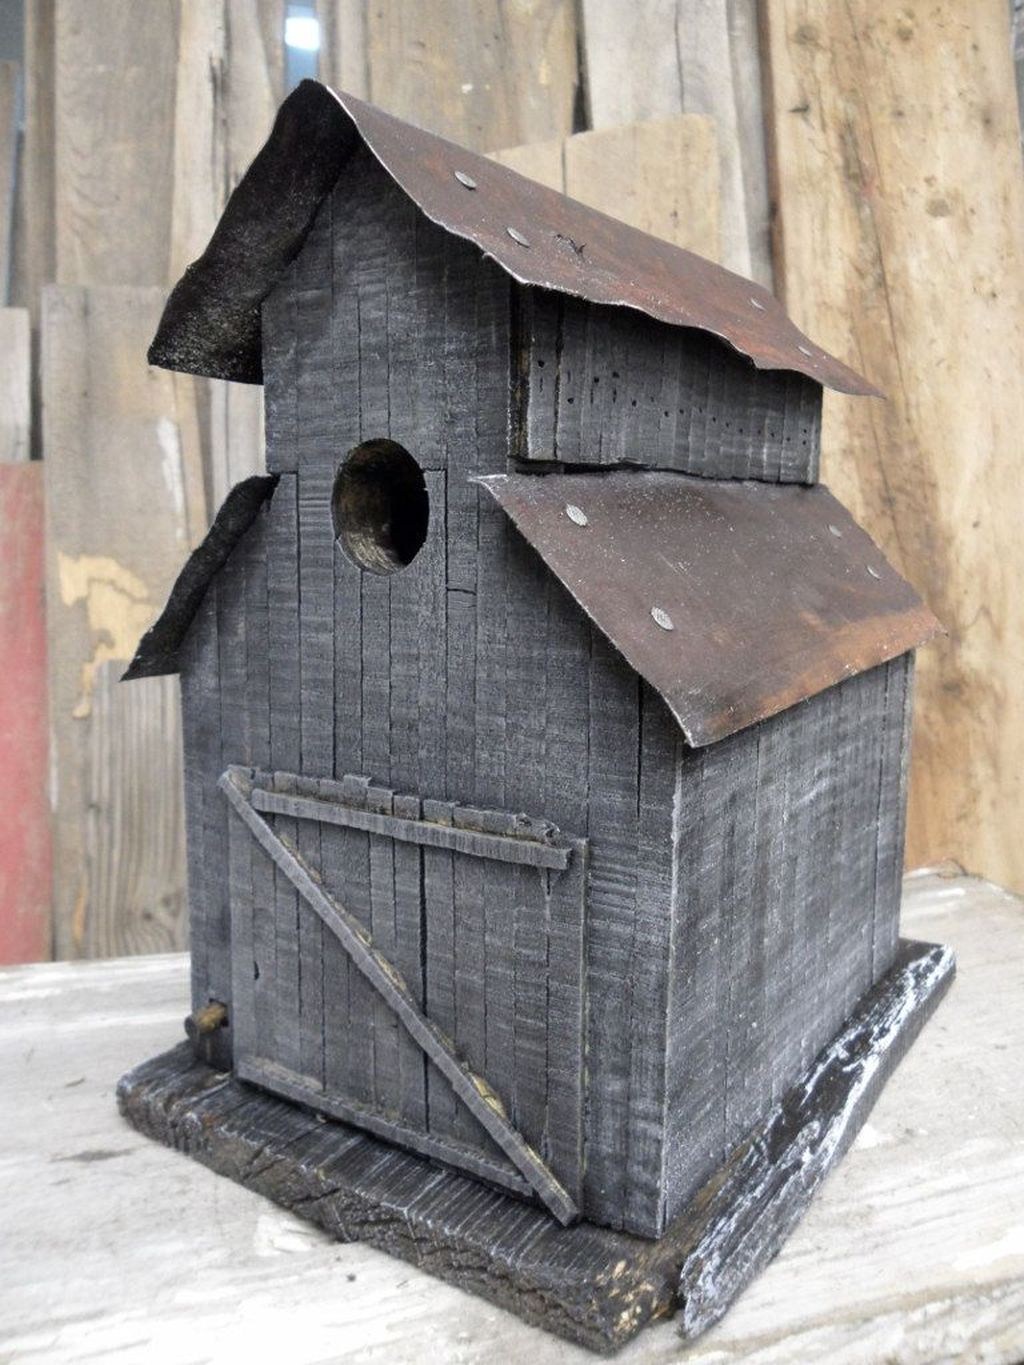 50 Amazing Bird House Ideas For Your Backyard Space - TREND4HOMY